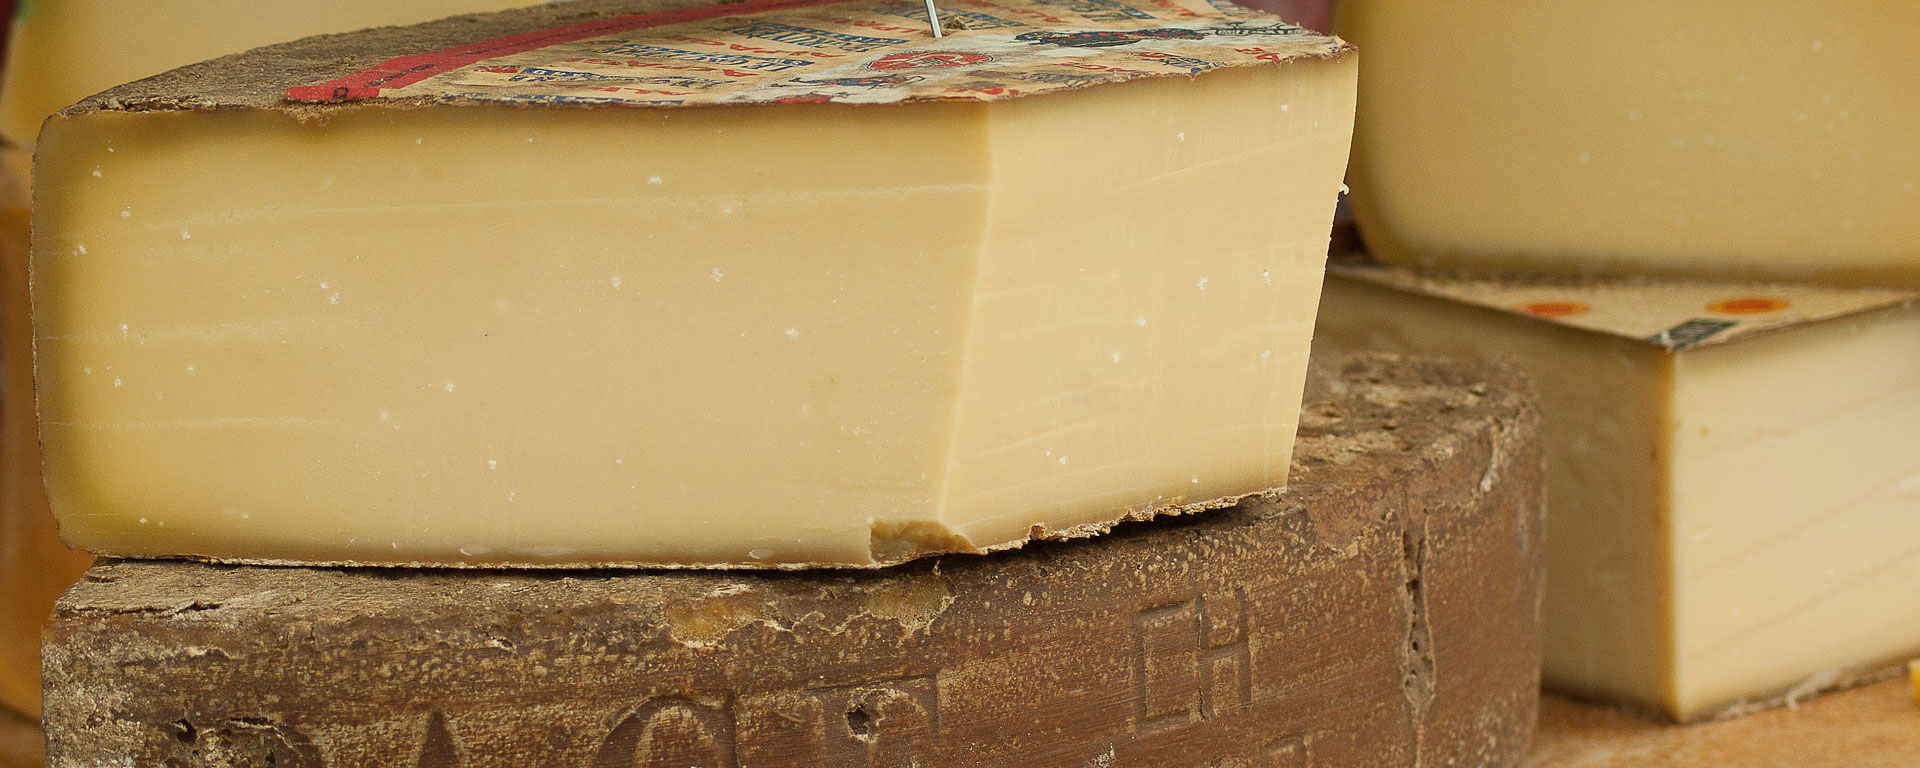 cheese-2368695_1920